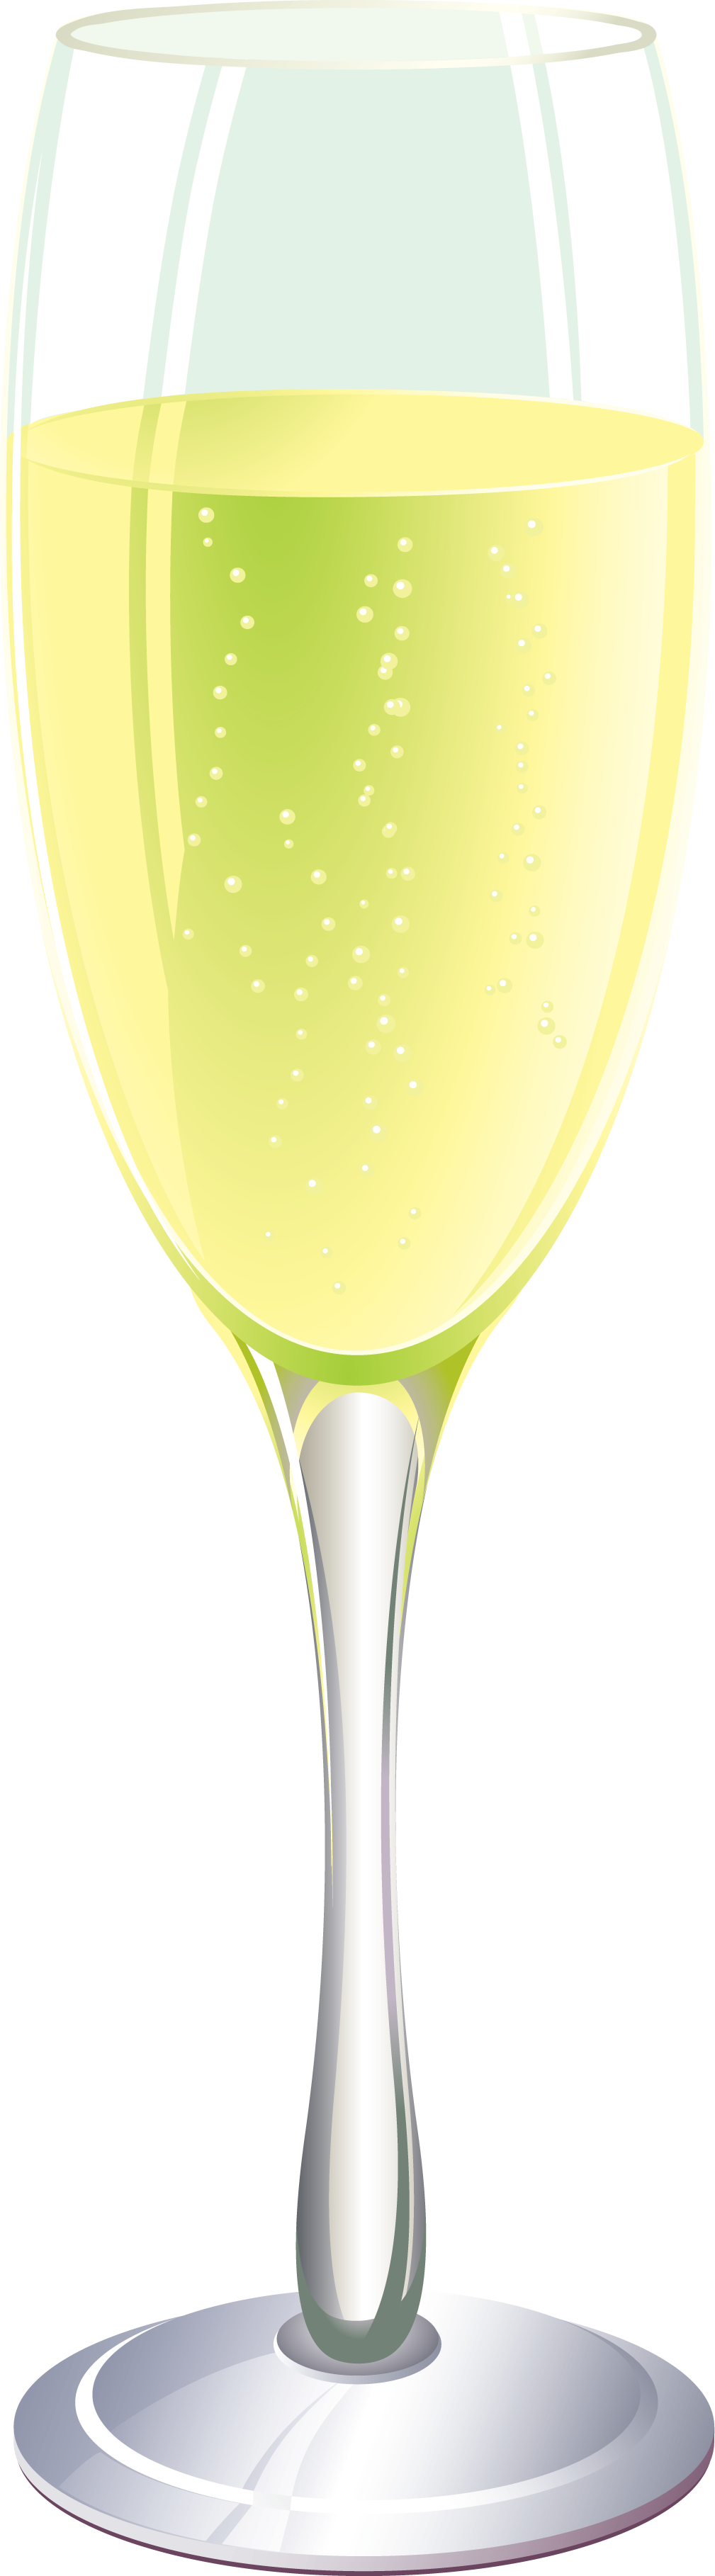 Kielich, szampan